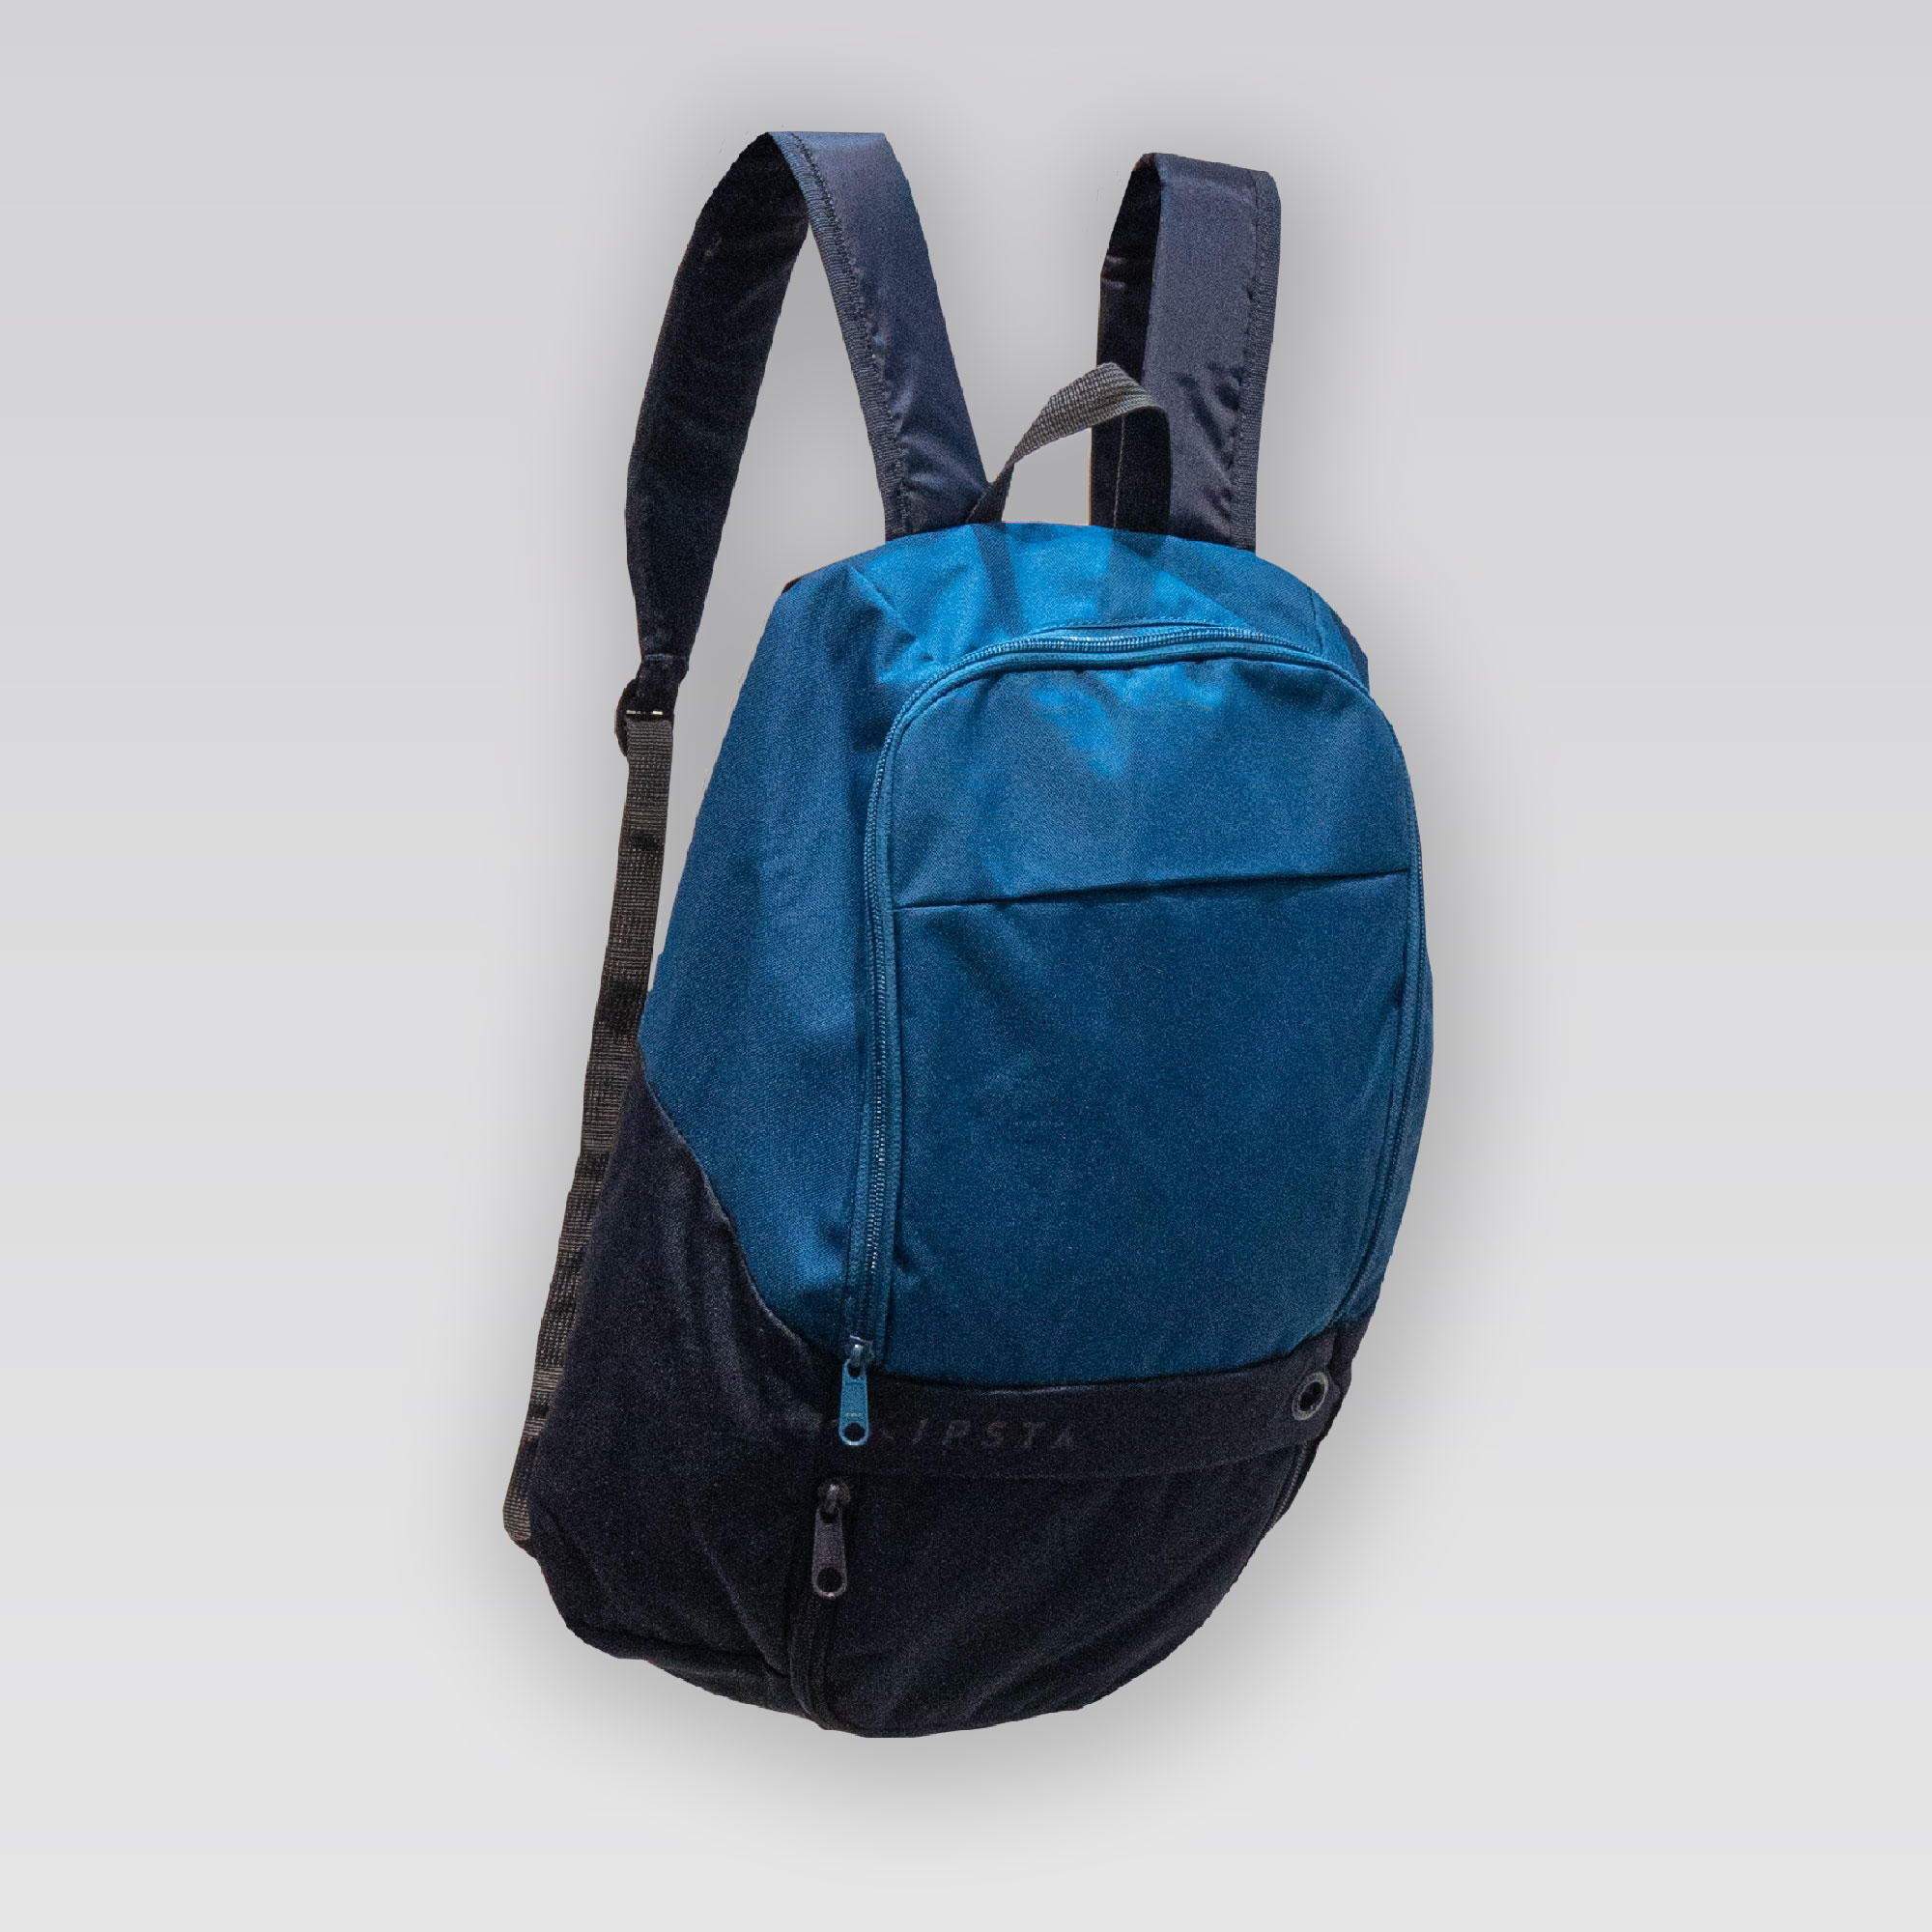 Aggregate more than 150 quechua small bags latest - 3tdesign.edu.vn